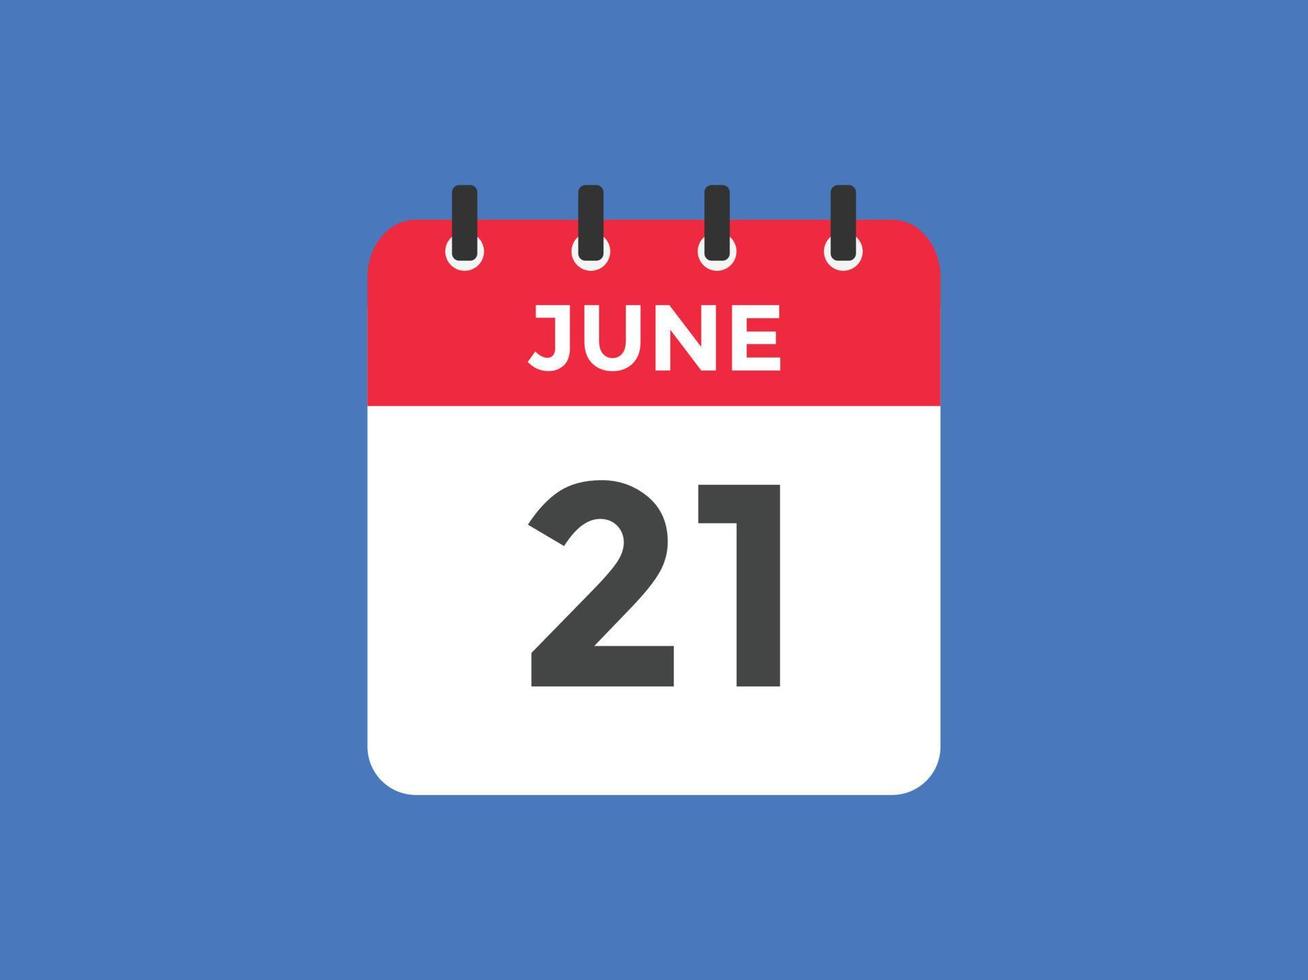 juni 21 kalender påminnelse. 21: e juni dagligen kalender ikon mall. kalender 21: e juni ikon design mall. vektor illustration